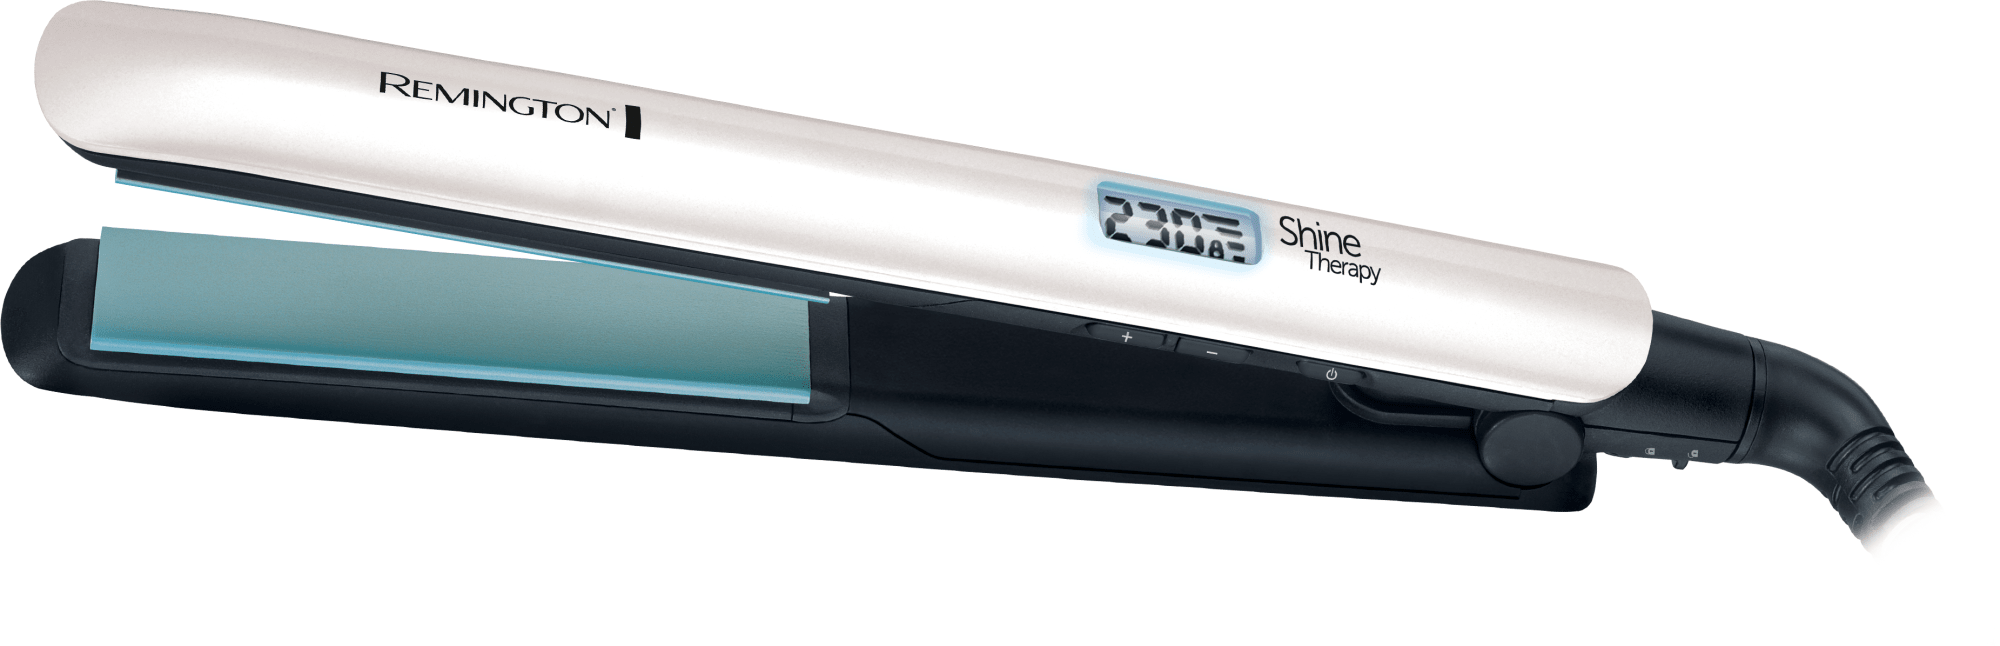  Remington S8500 Shine Therapy Straightener   